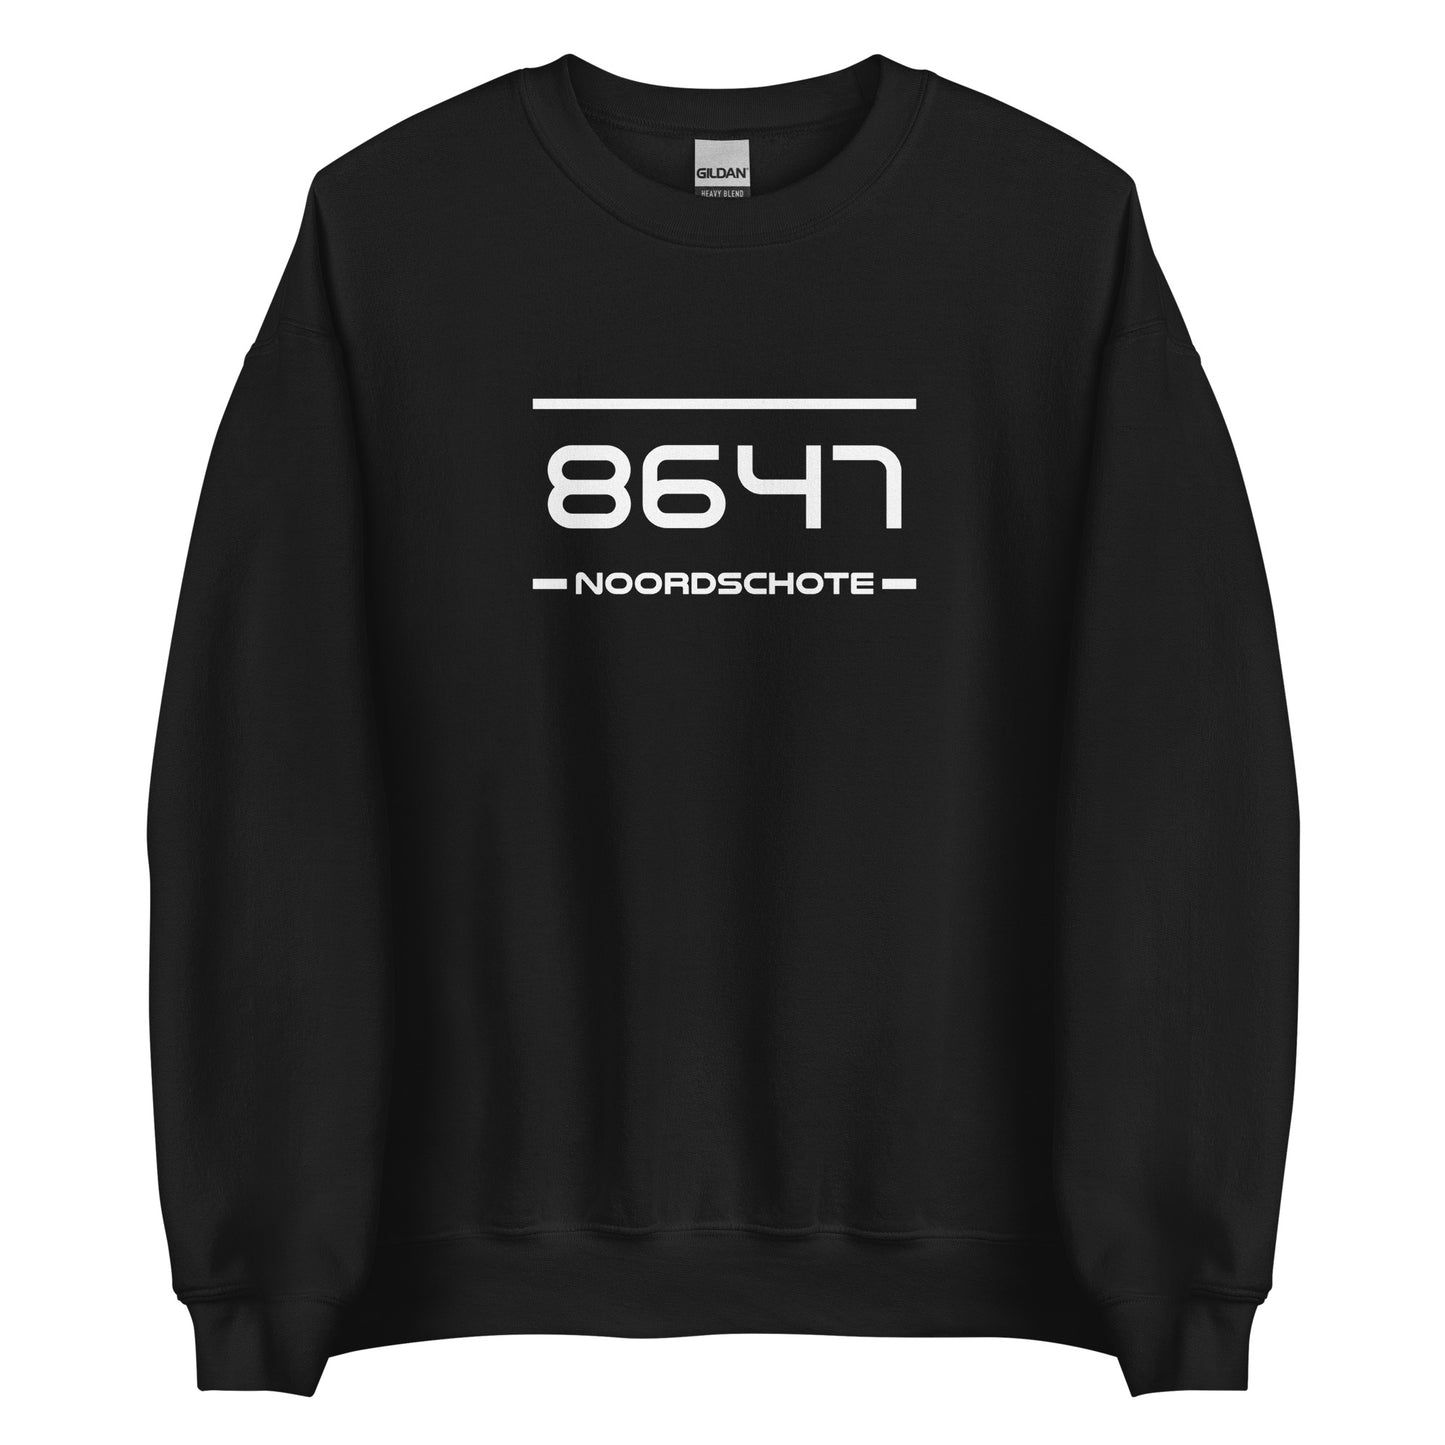 Sweater - 8647 - Noordschote (M/V)